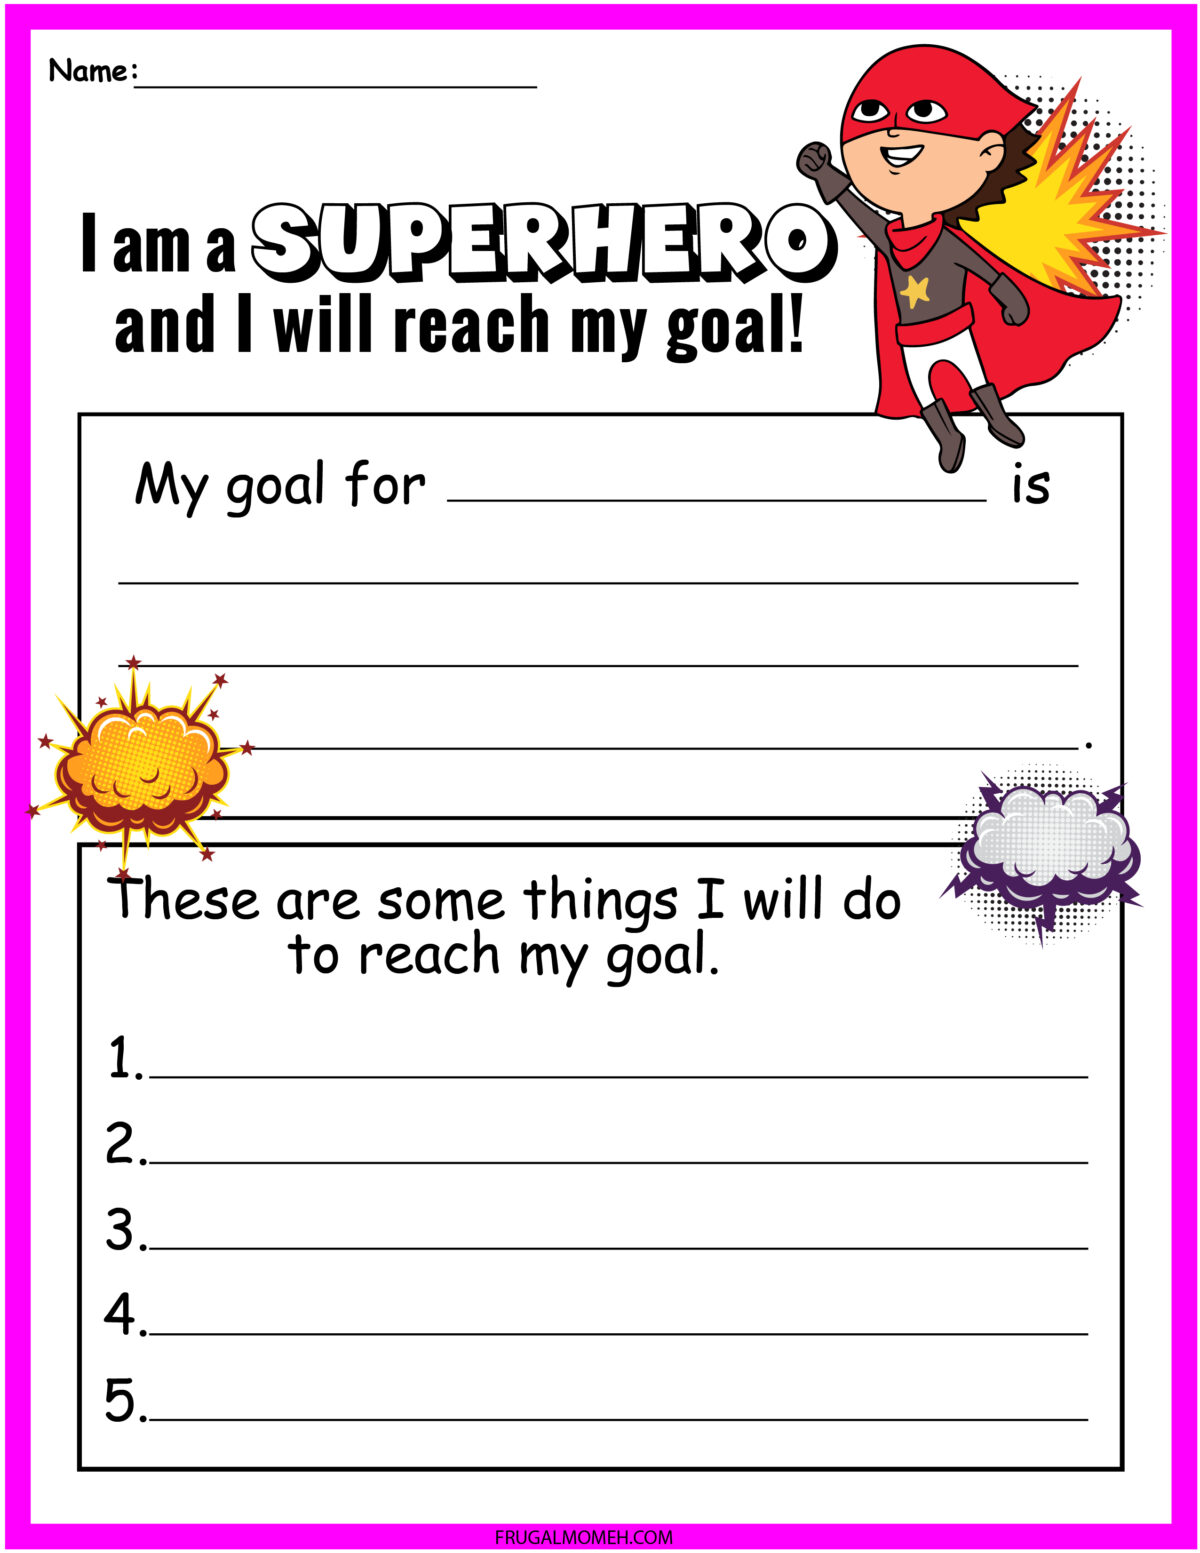 Ggoal setting sheet for kids with a fun superhero theme.